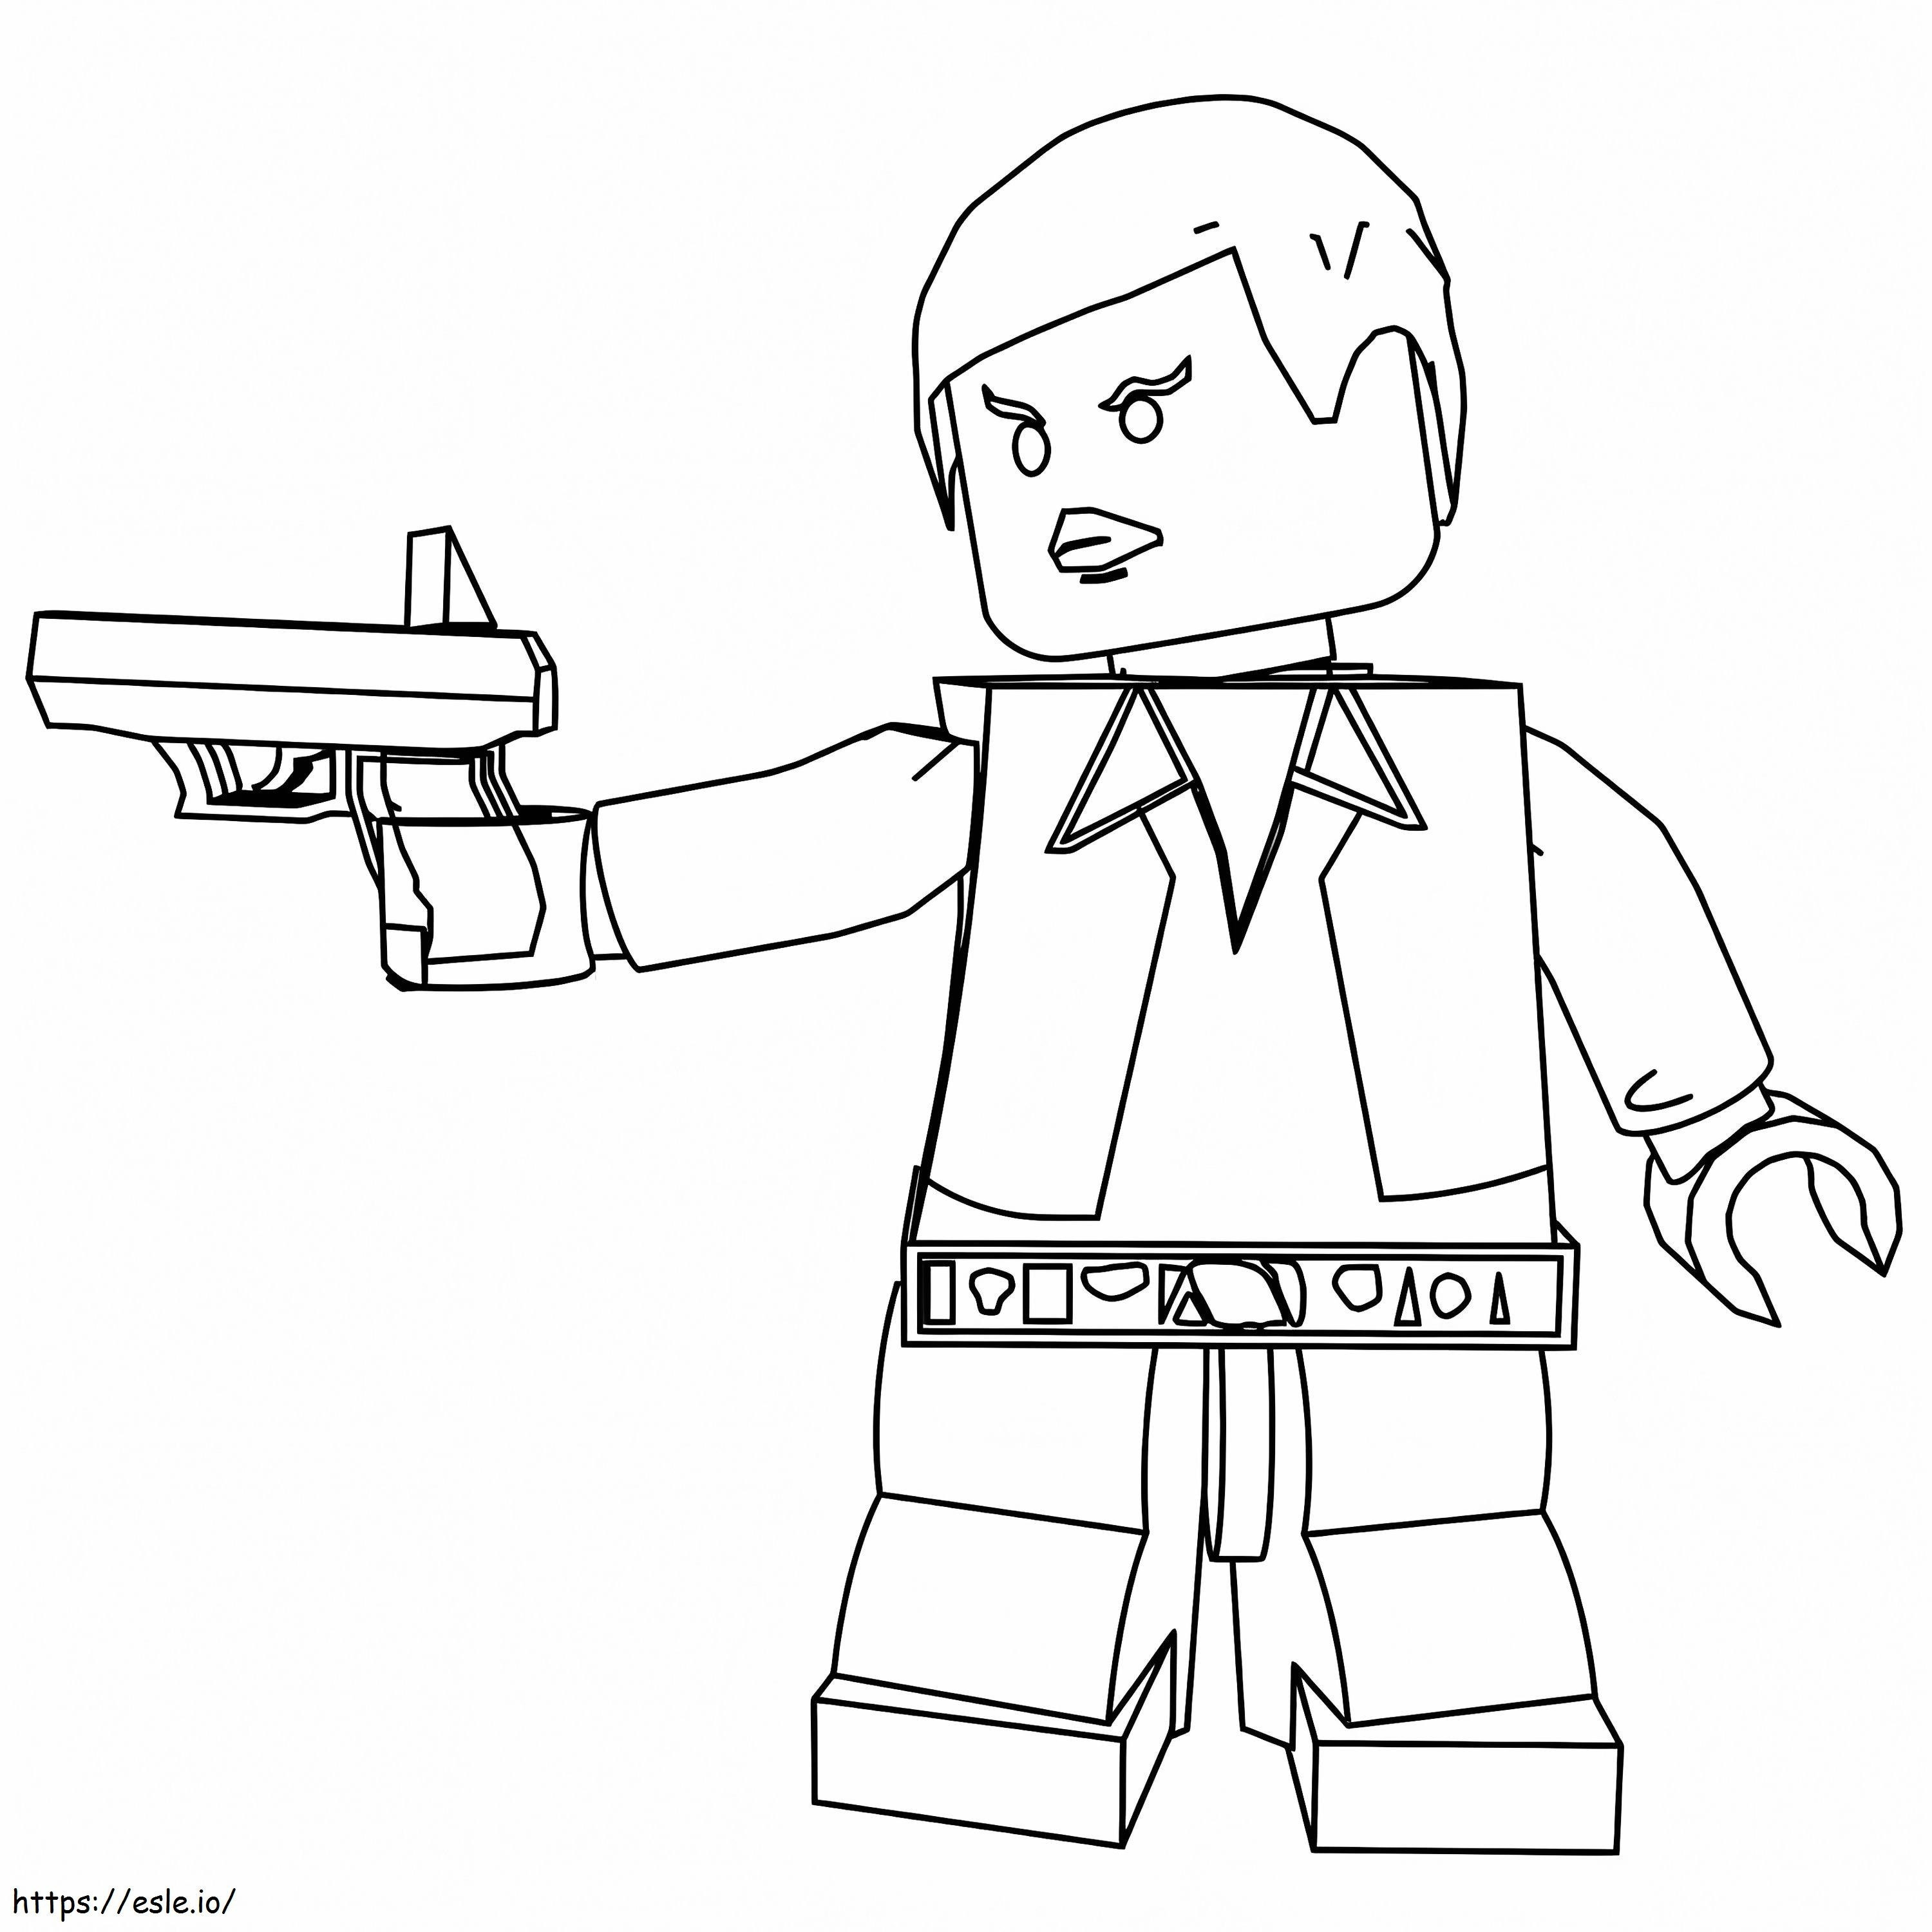 Lego Han Solo coloring page